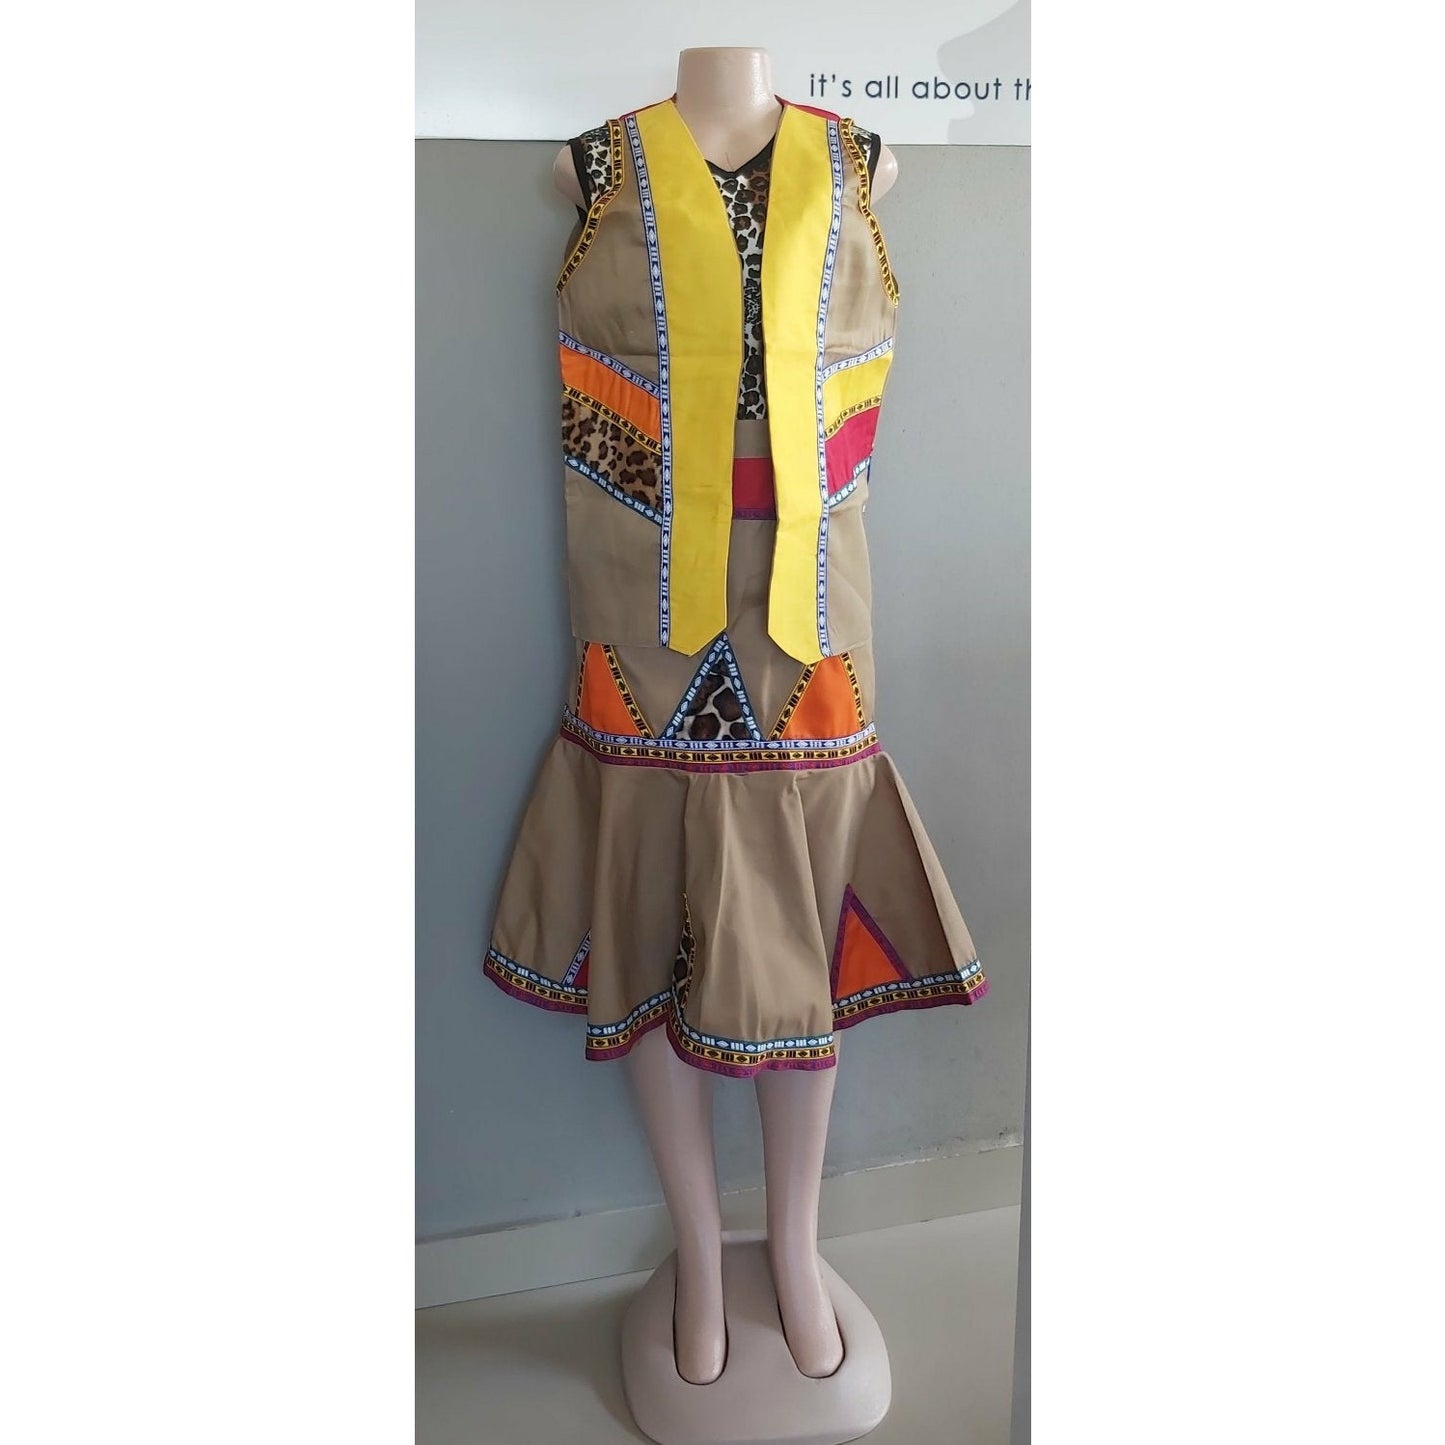 umBlaselo - Zulu Skirt and Waistcoat set 